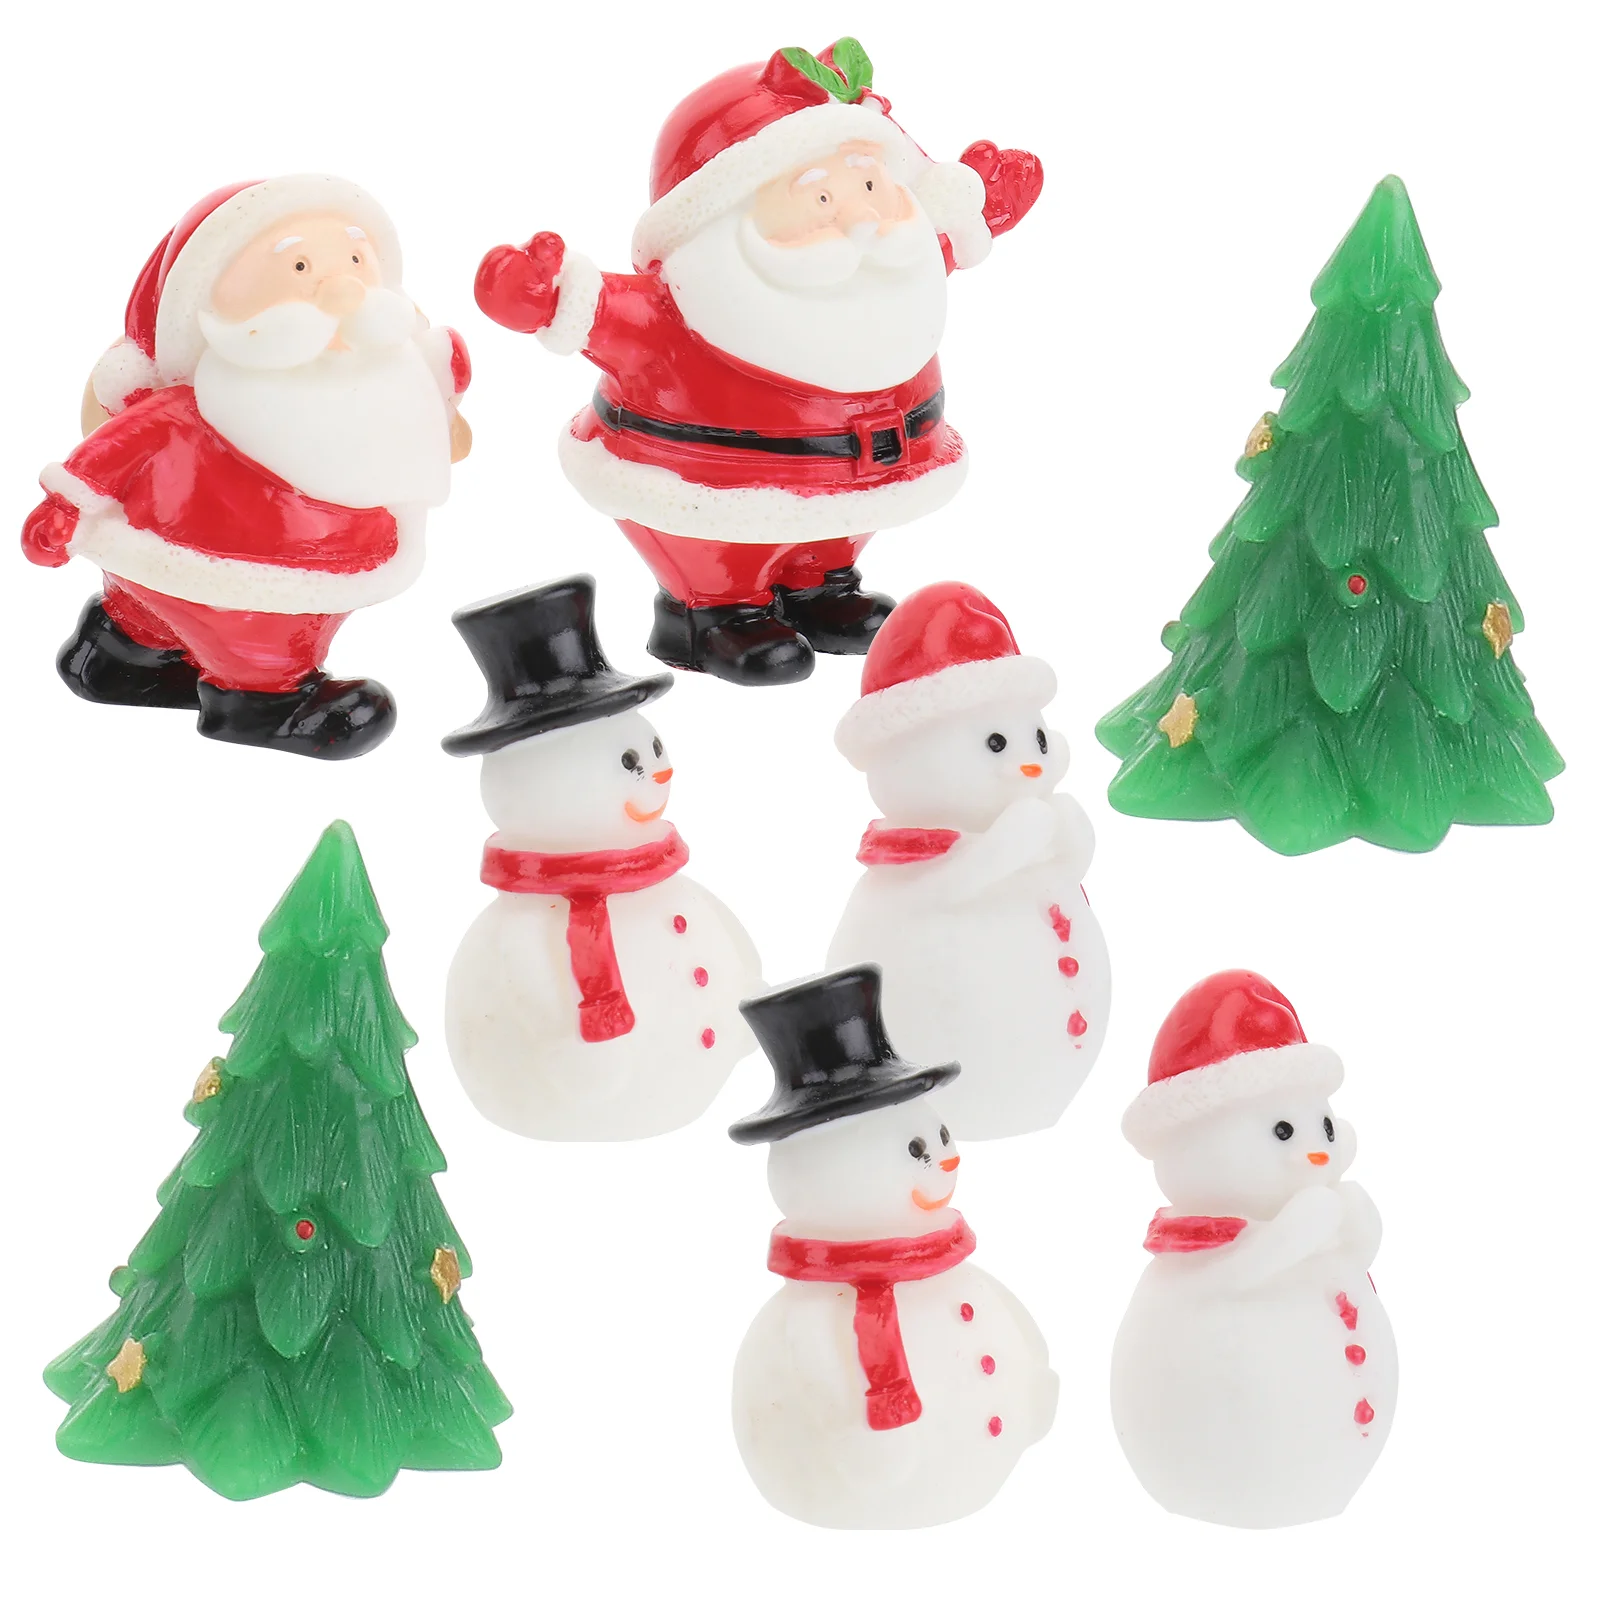 

8pcs Miniature Christmas Figurines Resin Christmas Decoration Santas Snowman Reindeer Xmas Tree Ornaments DIY Accessories (